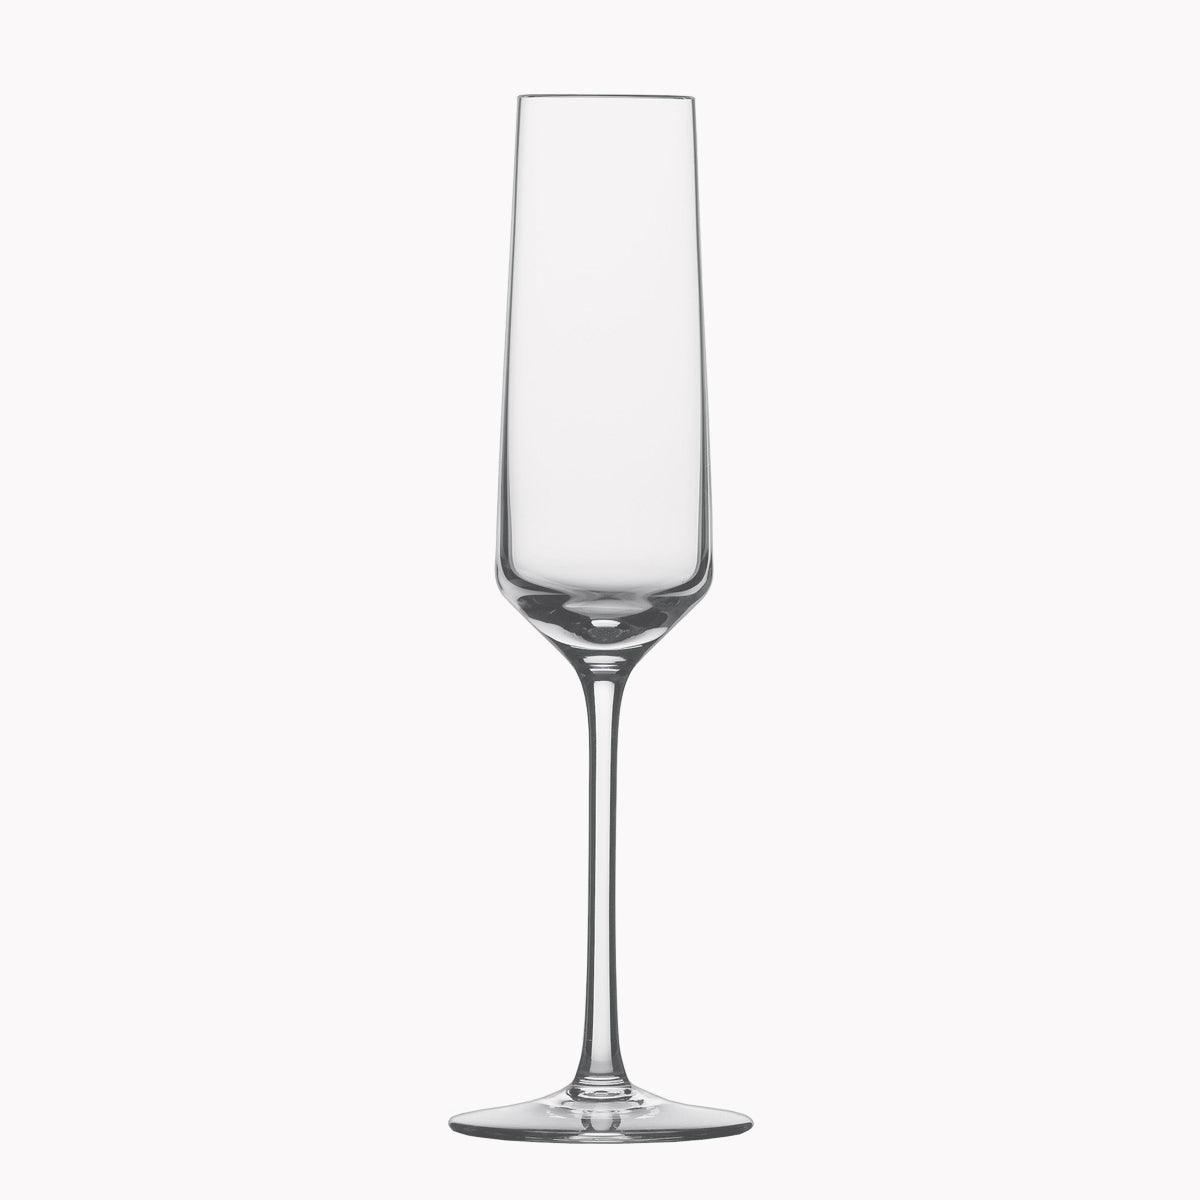 215cc【PURE】德國蔡司Schott Zwiesel 氣泡杯 世界最佳的水晶玻璃 - MSA玻璃雕刻